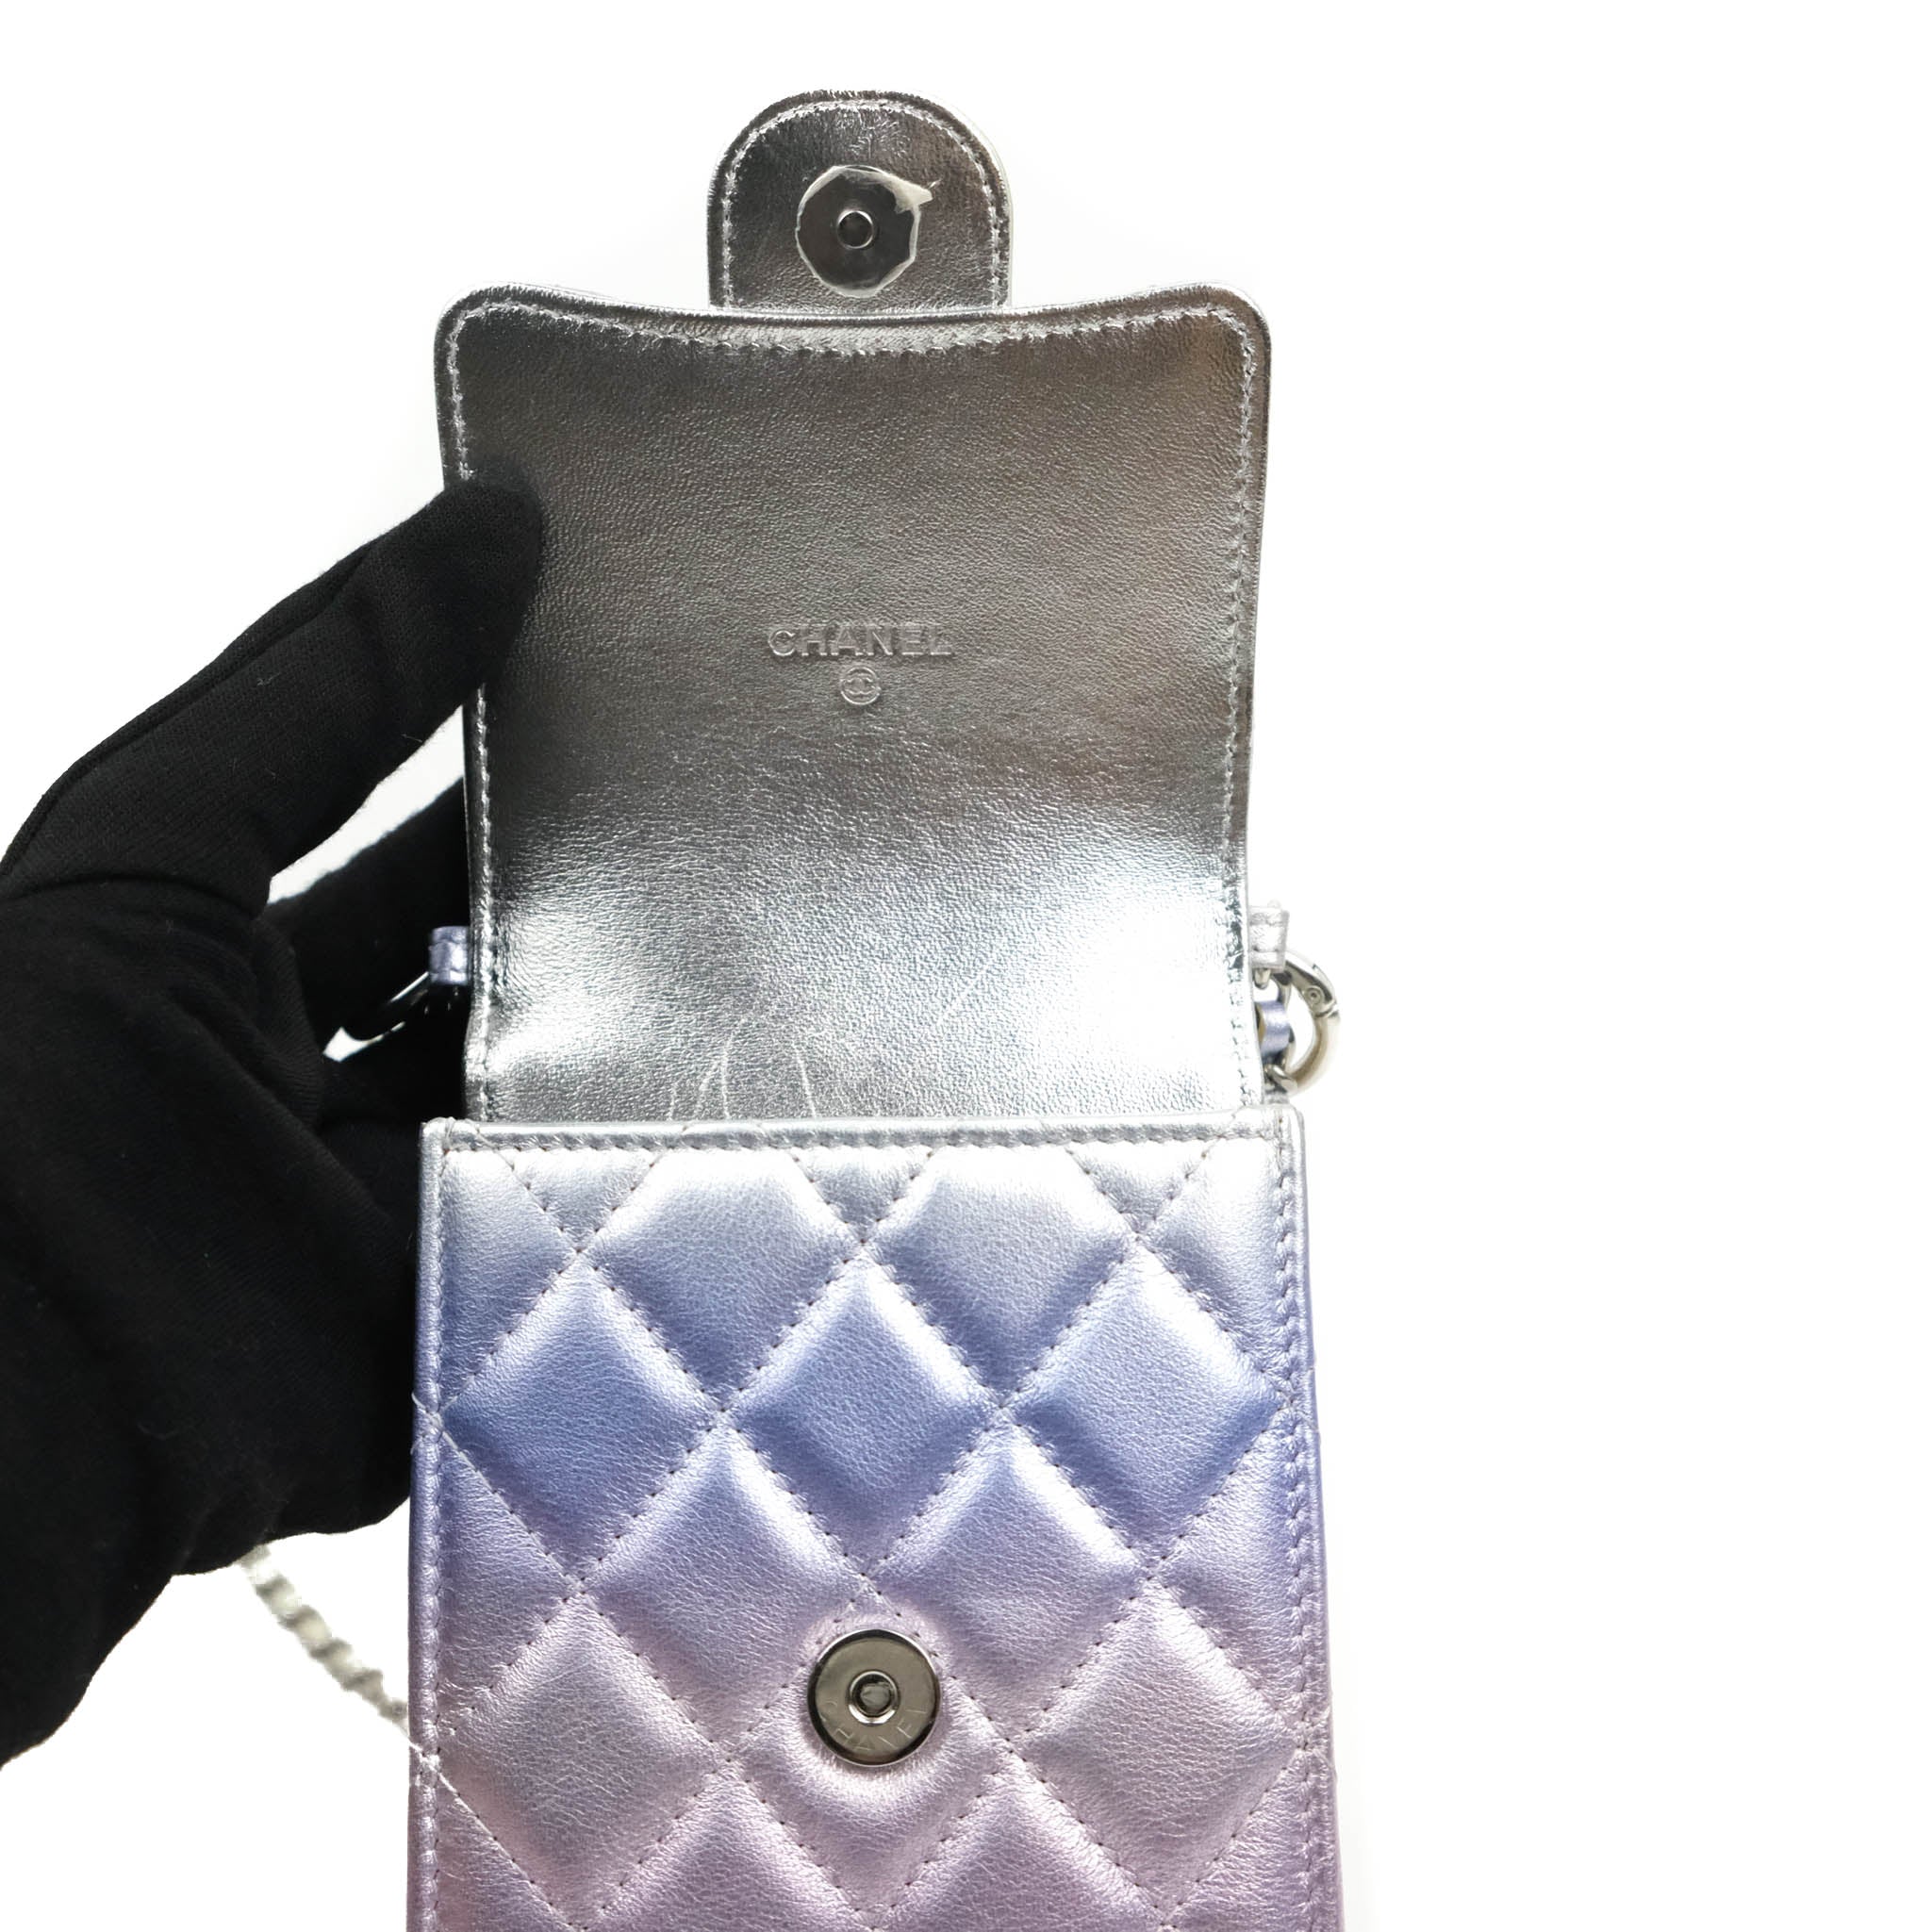 Chanel Classic Quilted Metallic Rainbow Lambskin Phone Holder